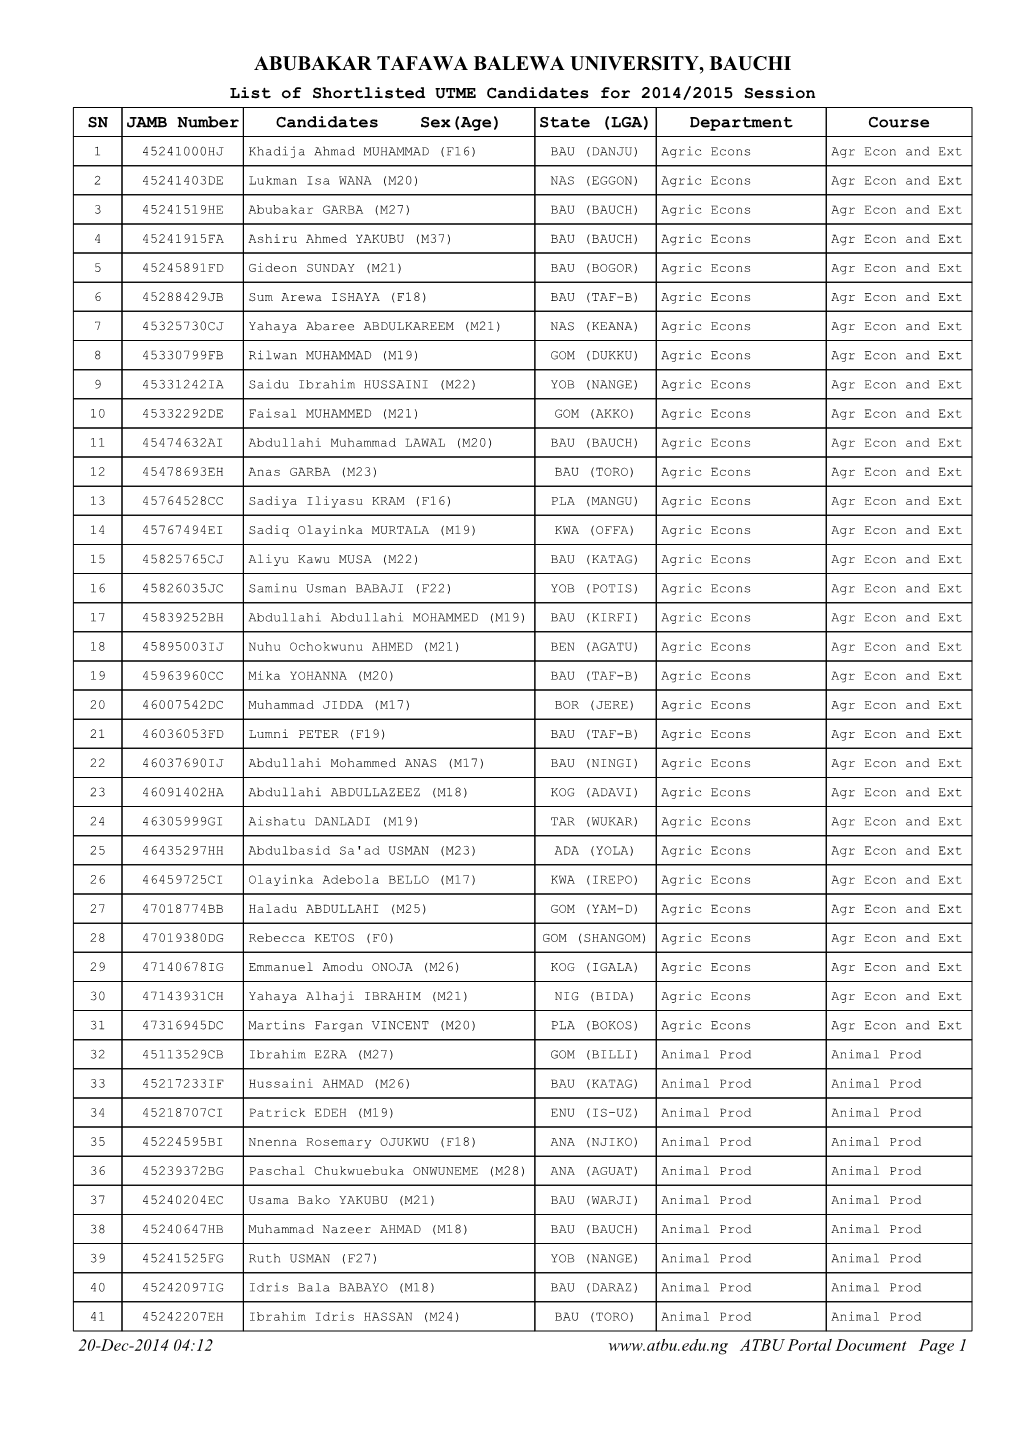 ABUBAKAR TAFAWA BALEWA UNIVERSITY, BAUCHI List of Shortlisted UTME Candidates for 2014/2015 Session SN JAMB Number Candidates Sex(Age) State (LGA) Department Course